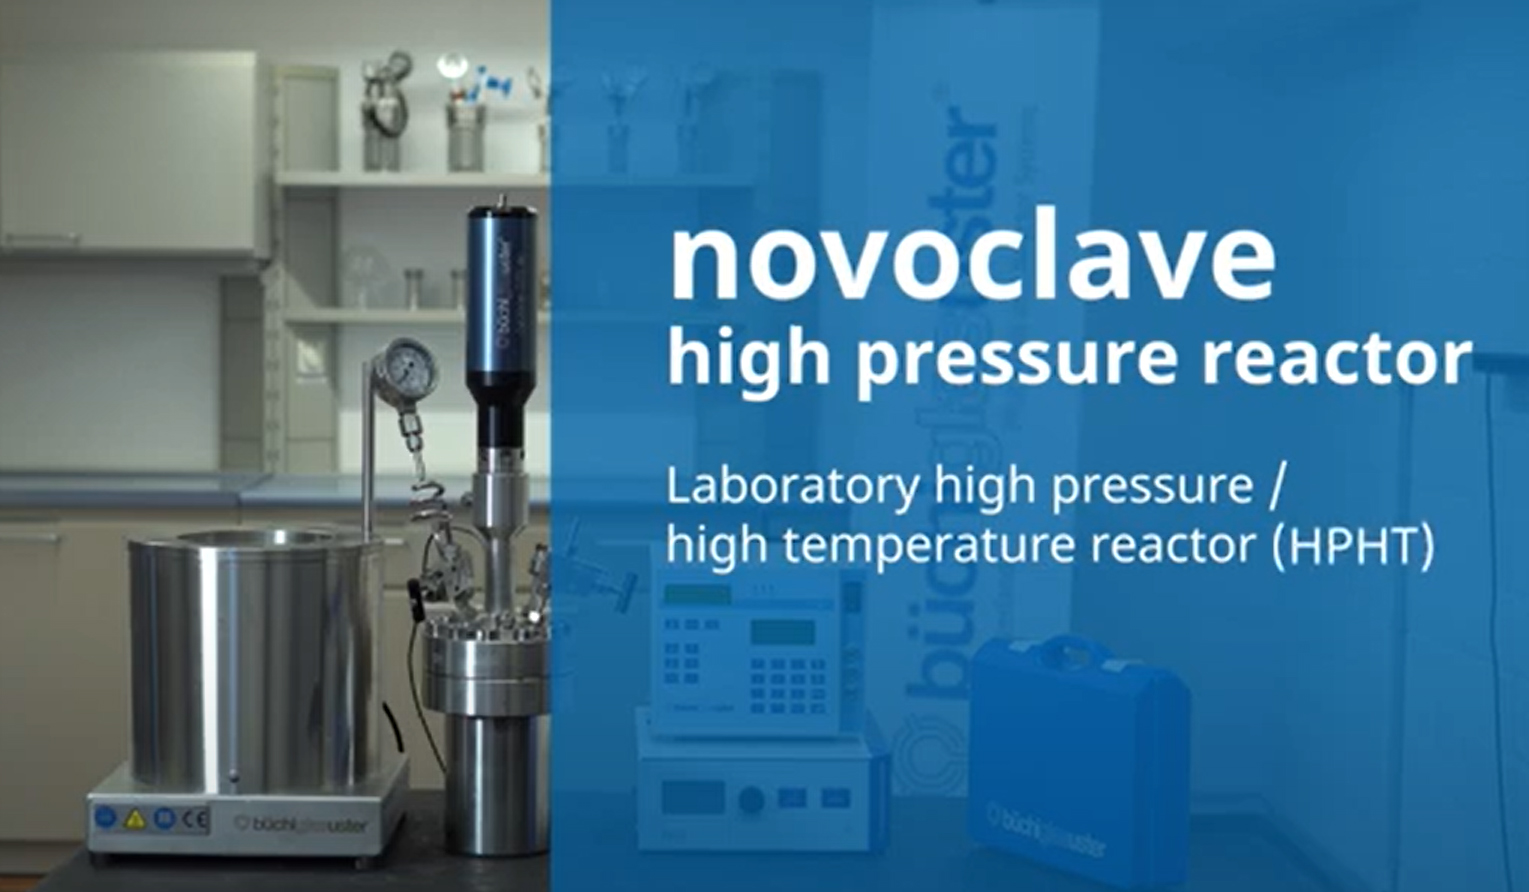 novoclave - high pressure reactor